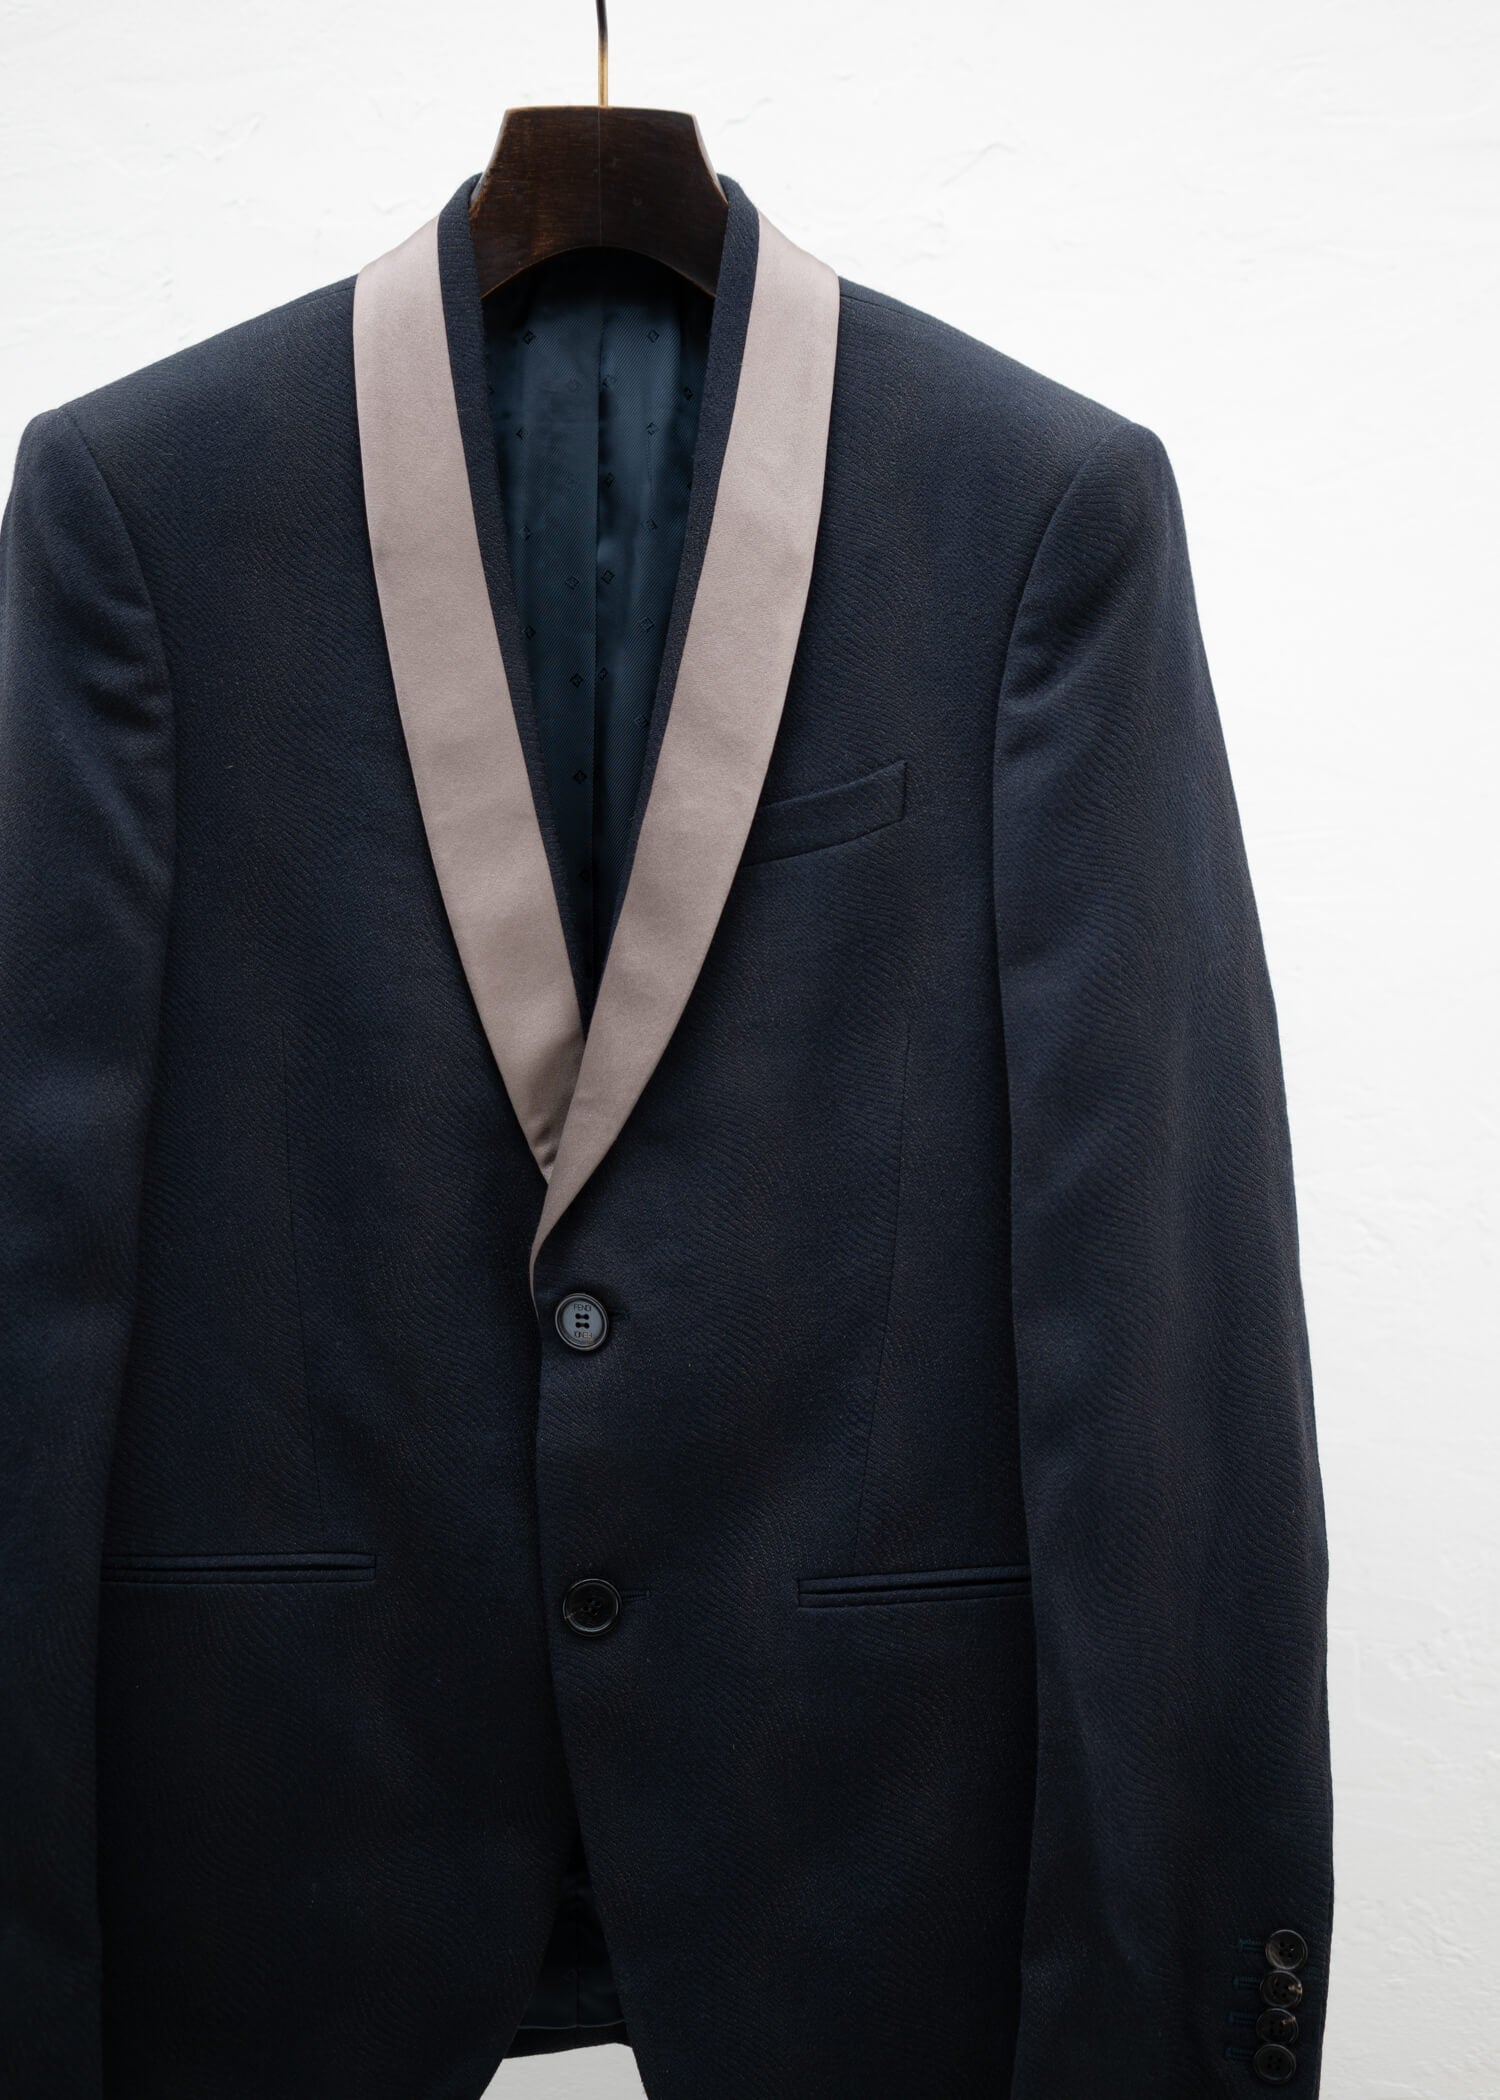 FENDI Wool Silk Jacquard Jacket